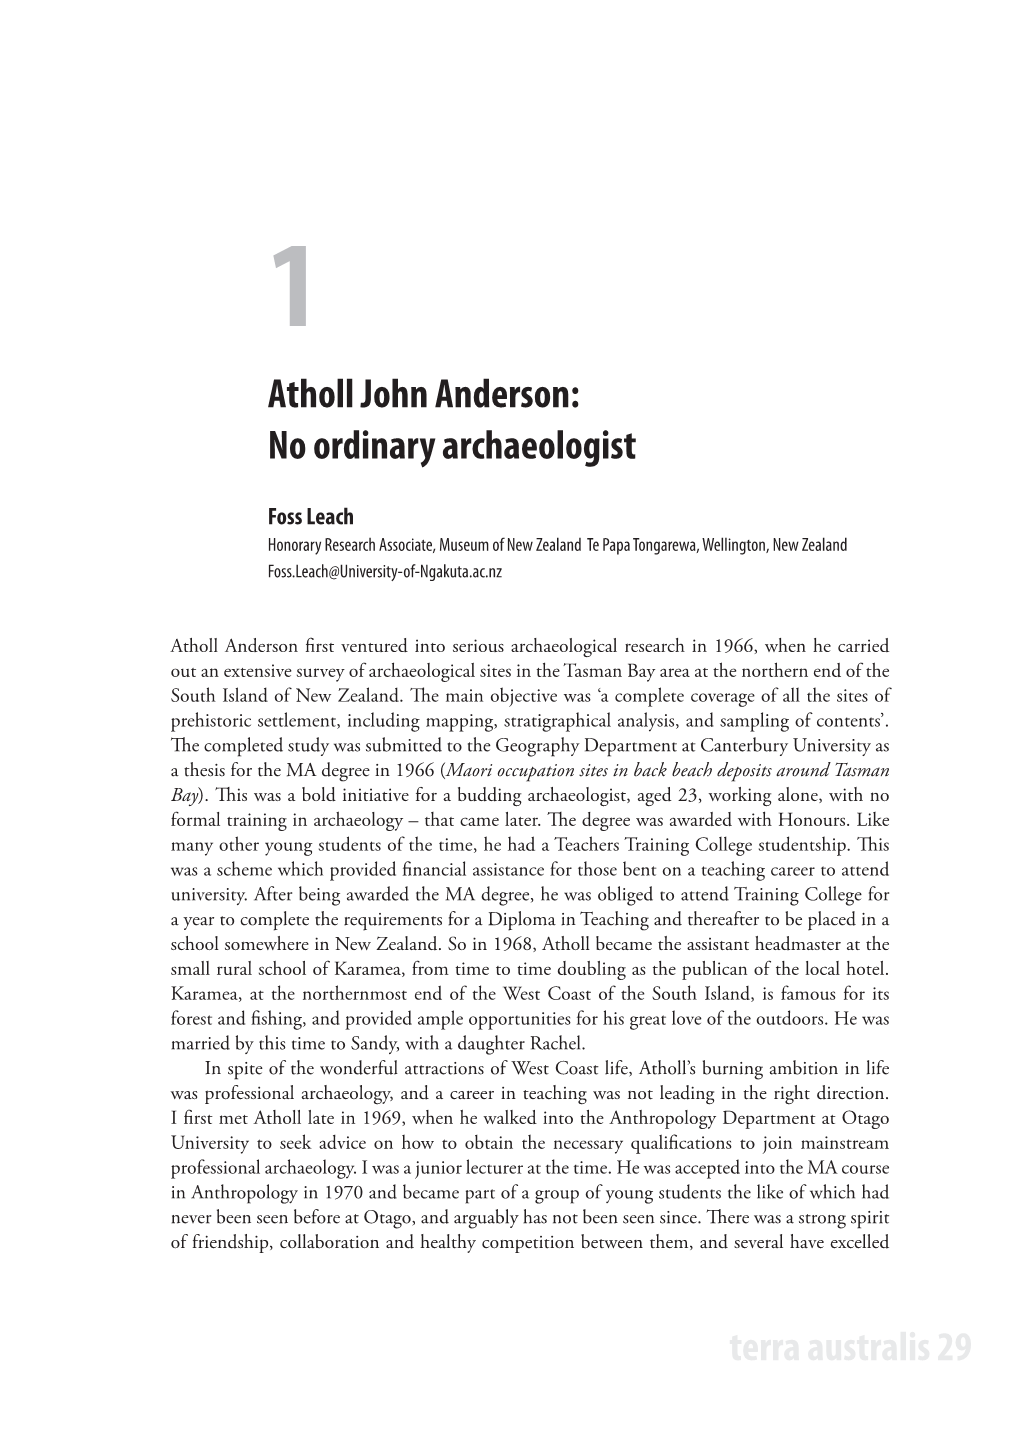 Terra Australis 29 Atholl John Anderson: No Ordinary Archaeologist 3